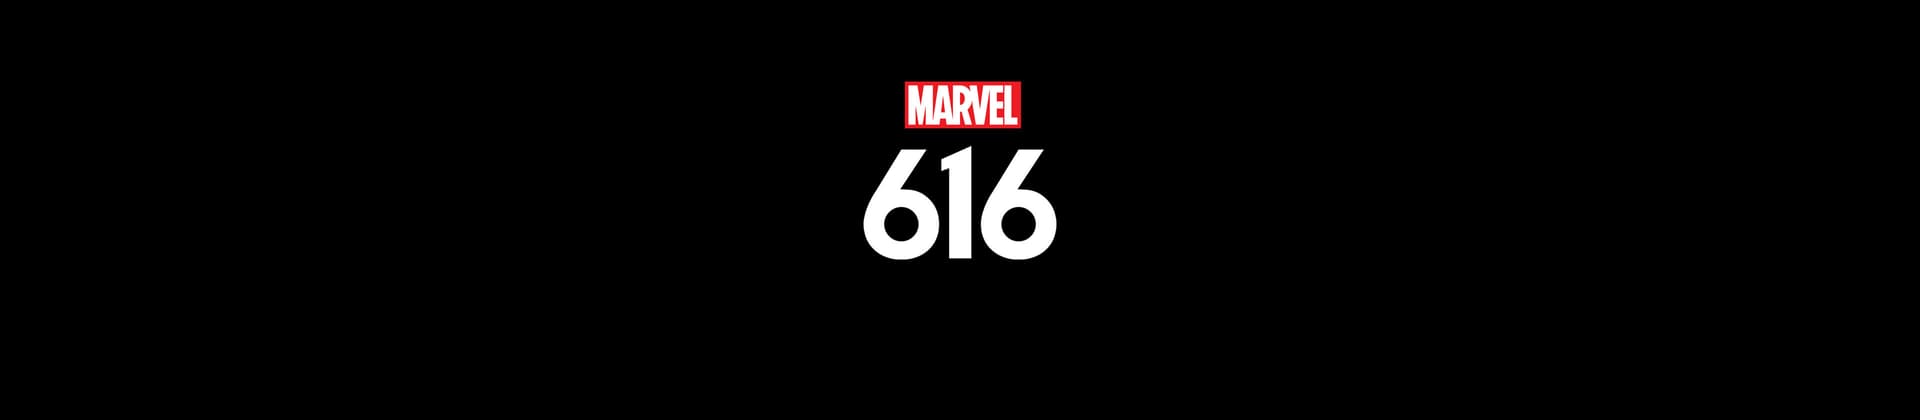 Marvel's 616 TV Show Logo on Black Season 1